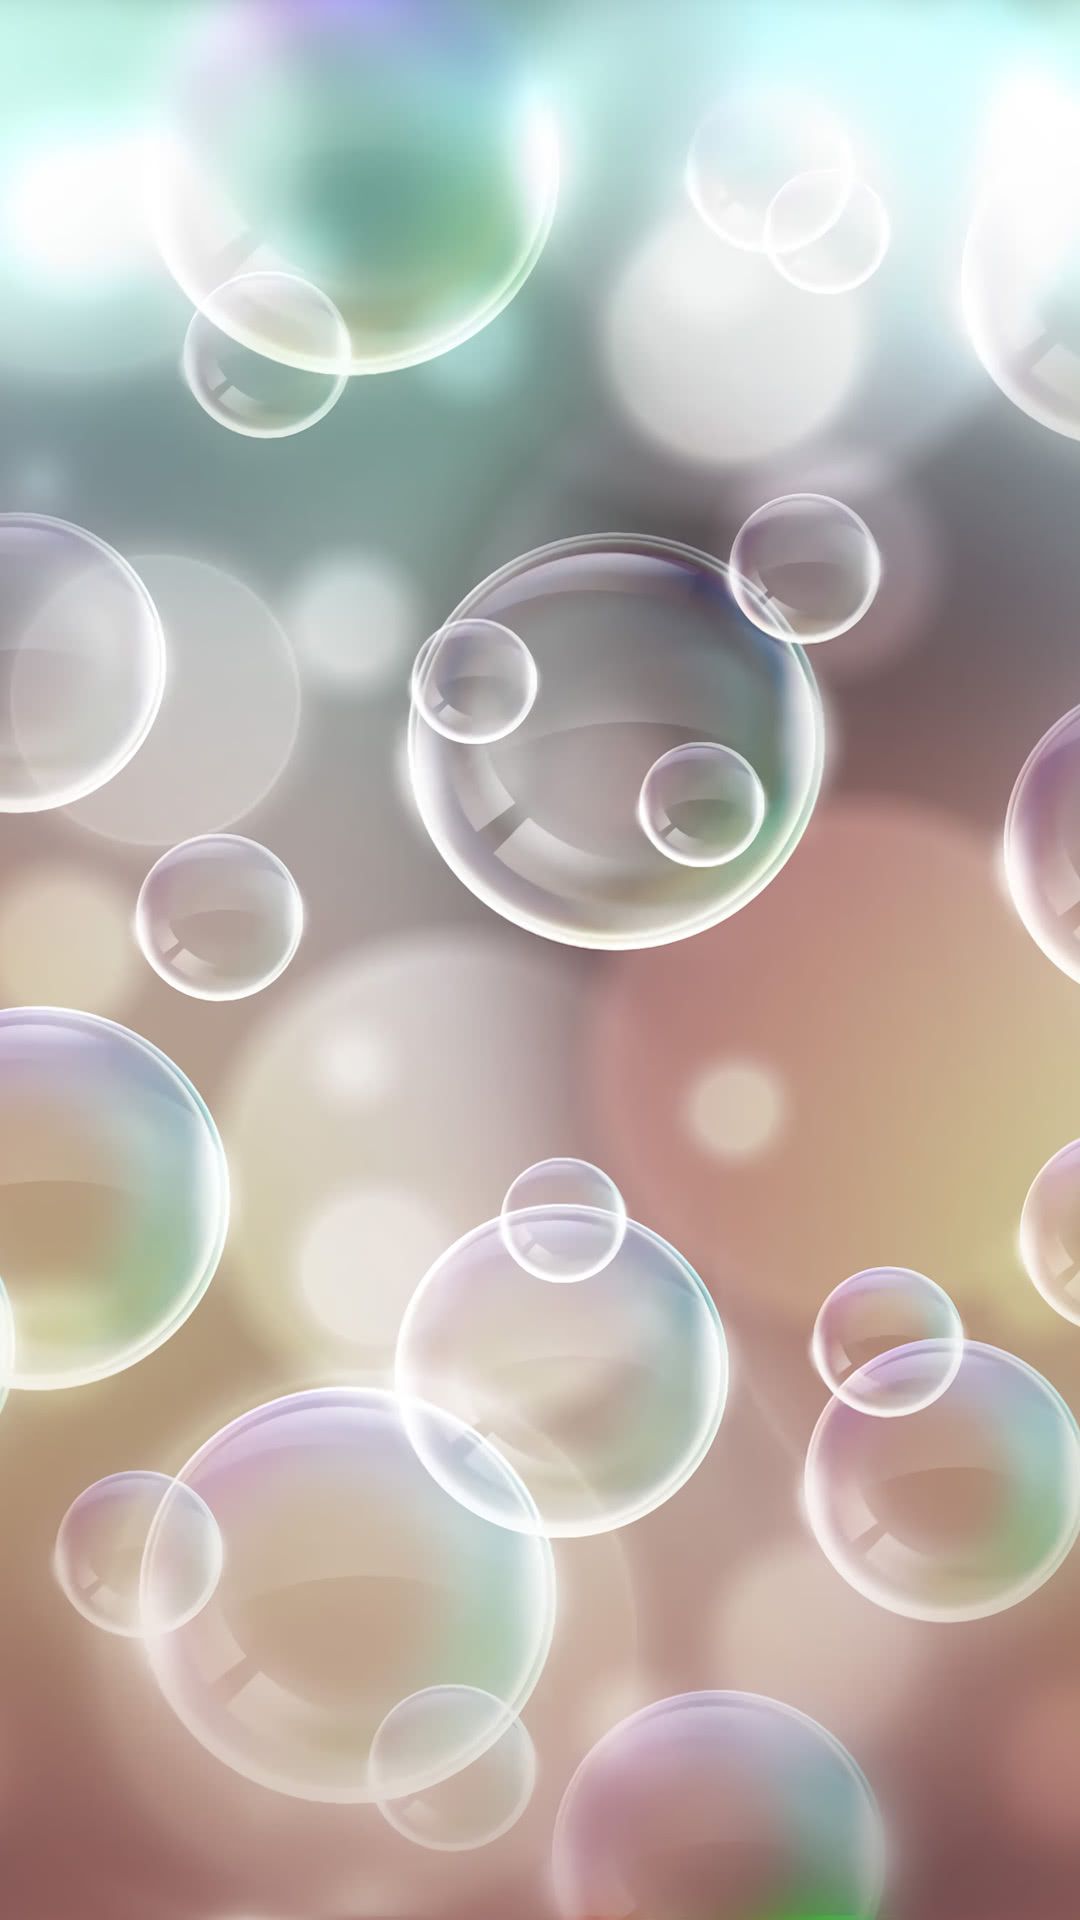 Dandelion. iPhone Wallpaper. Bubbles wallpaper, Pretty wallpaper, Bright wallpaper